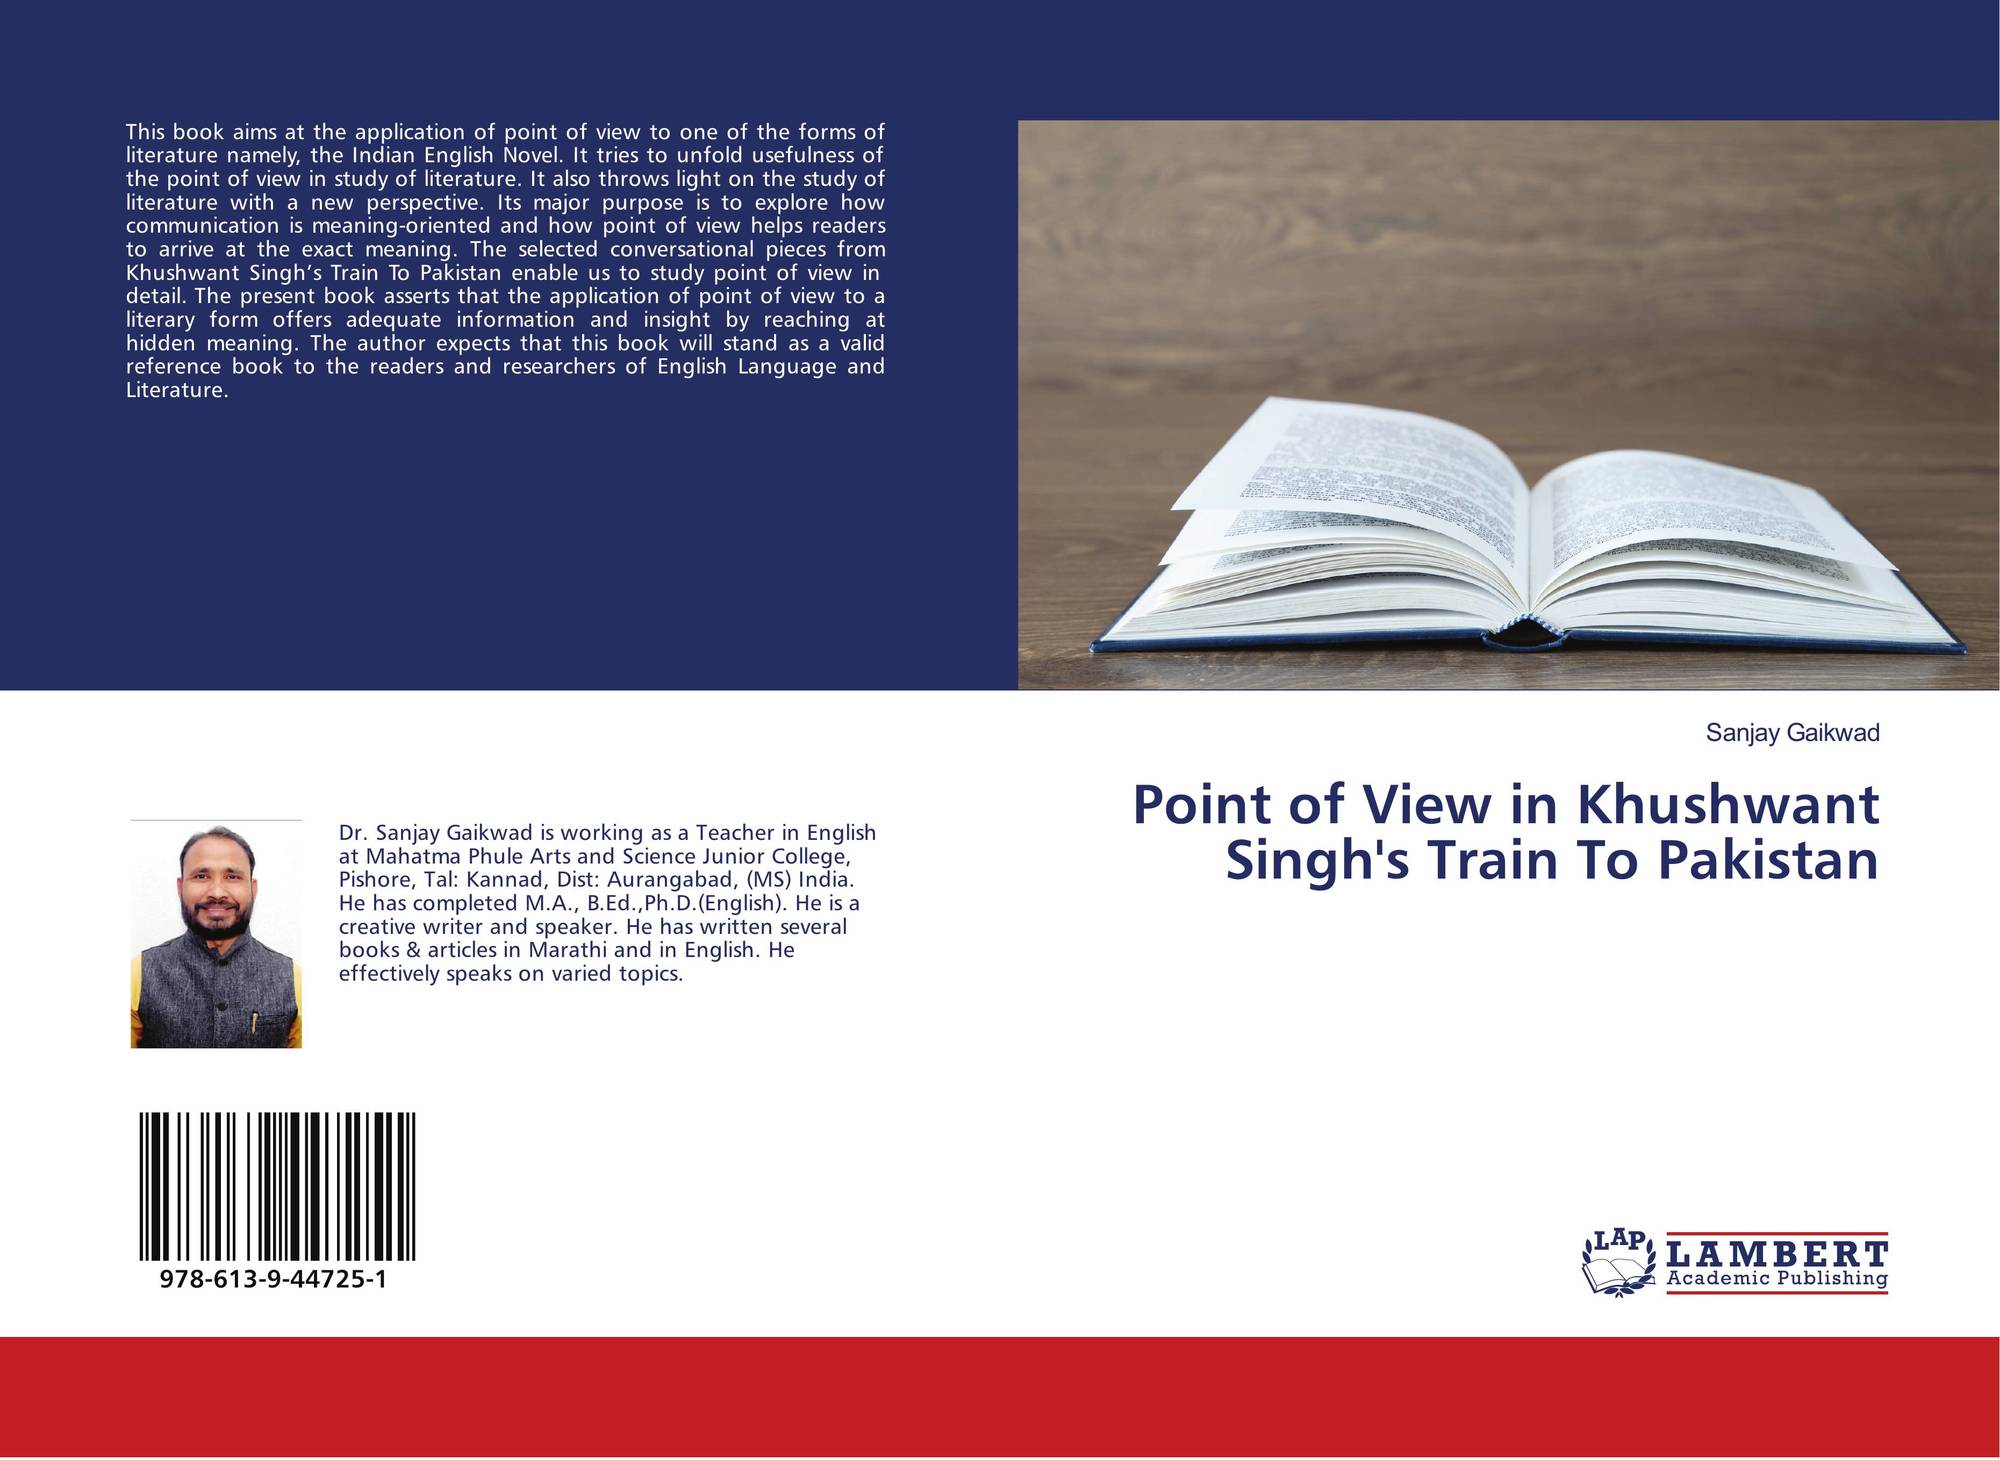 train to pakistan book